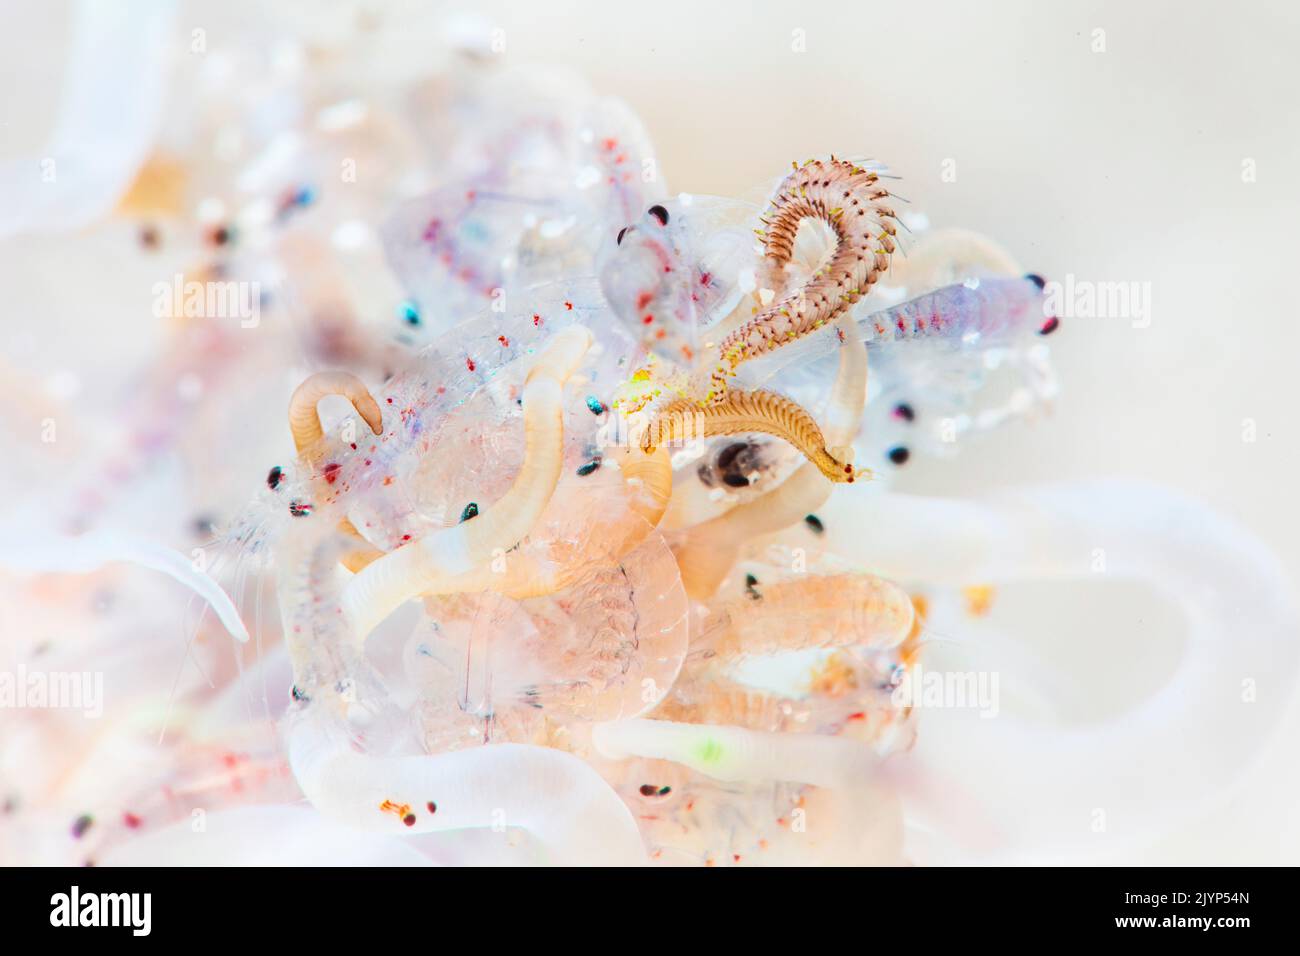 Tube anemone (Cerianthidae sp) catch macro plancton, Mayotte Stock Photo